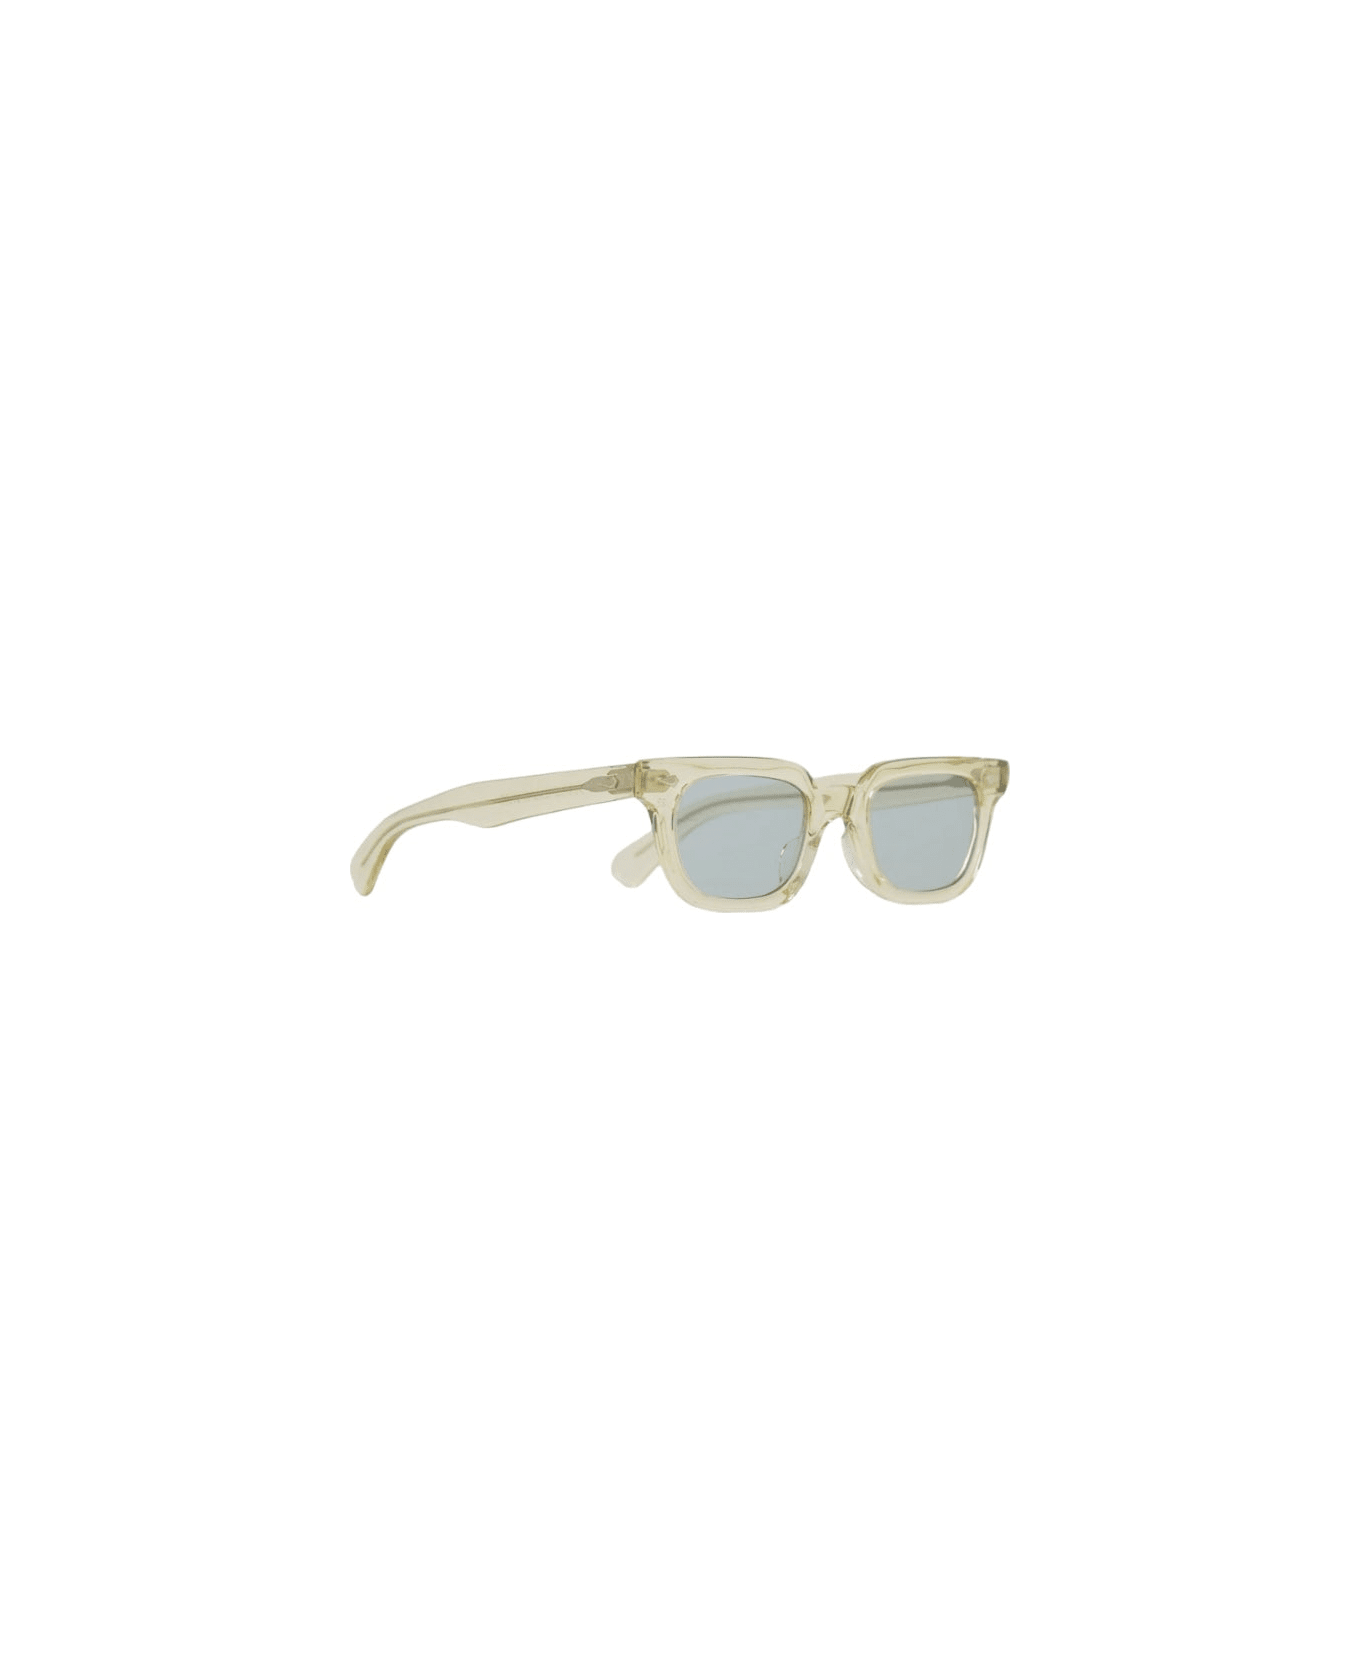 Julius Tart Optical T-man - Champagne Sunglasses サングラス